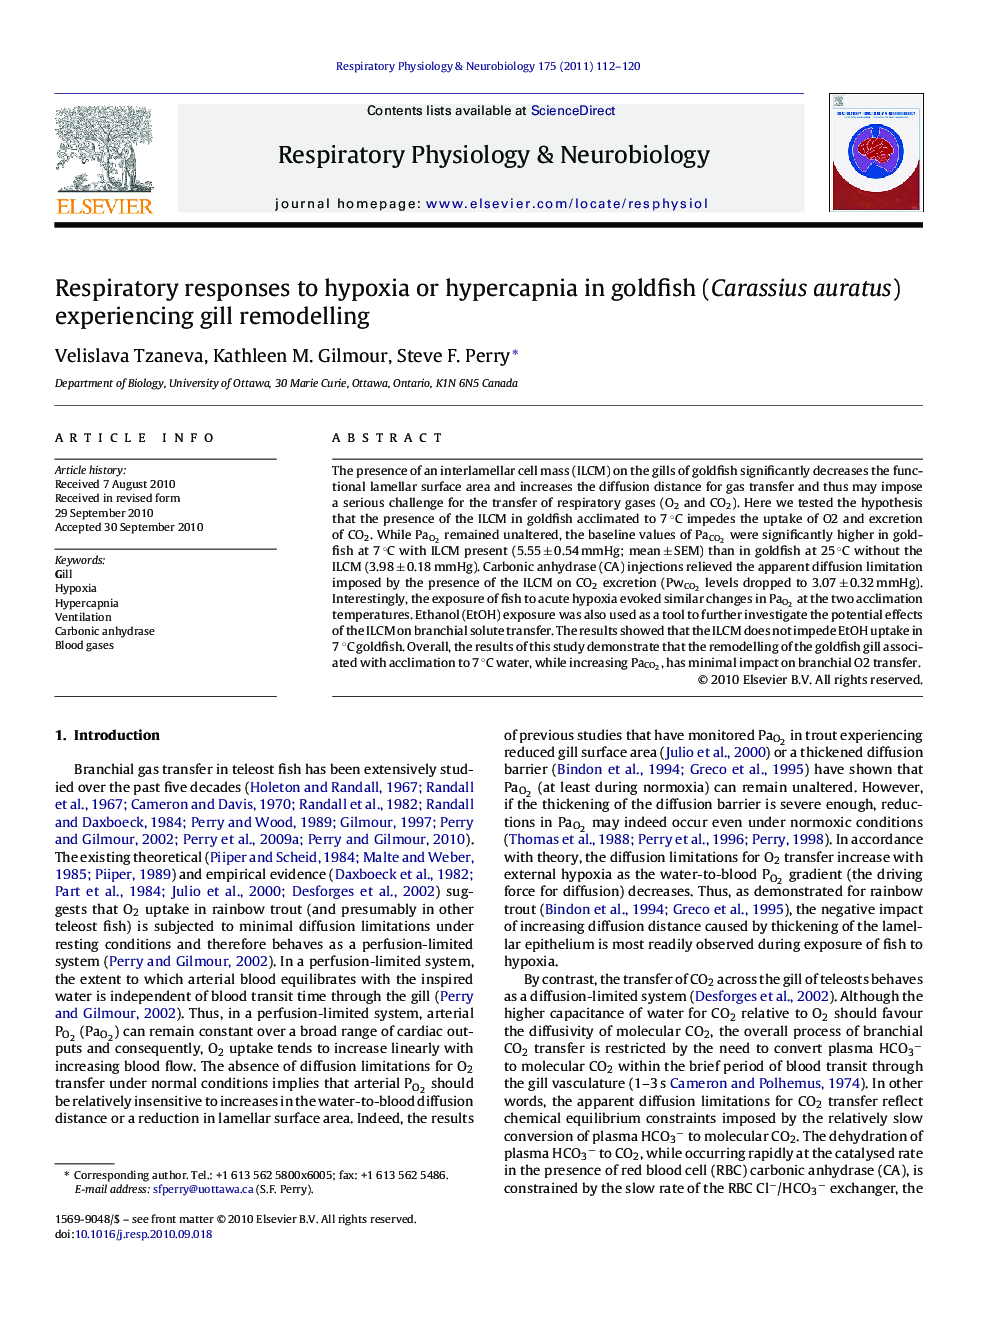 Respiratory responses to hypoxia or hypercapnia in goldfish (Carassius auratus) experiencing gill remodelling